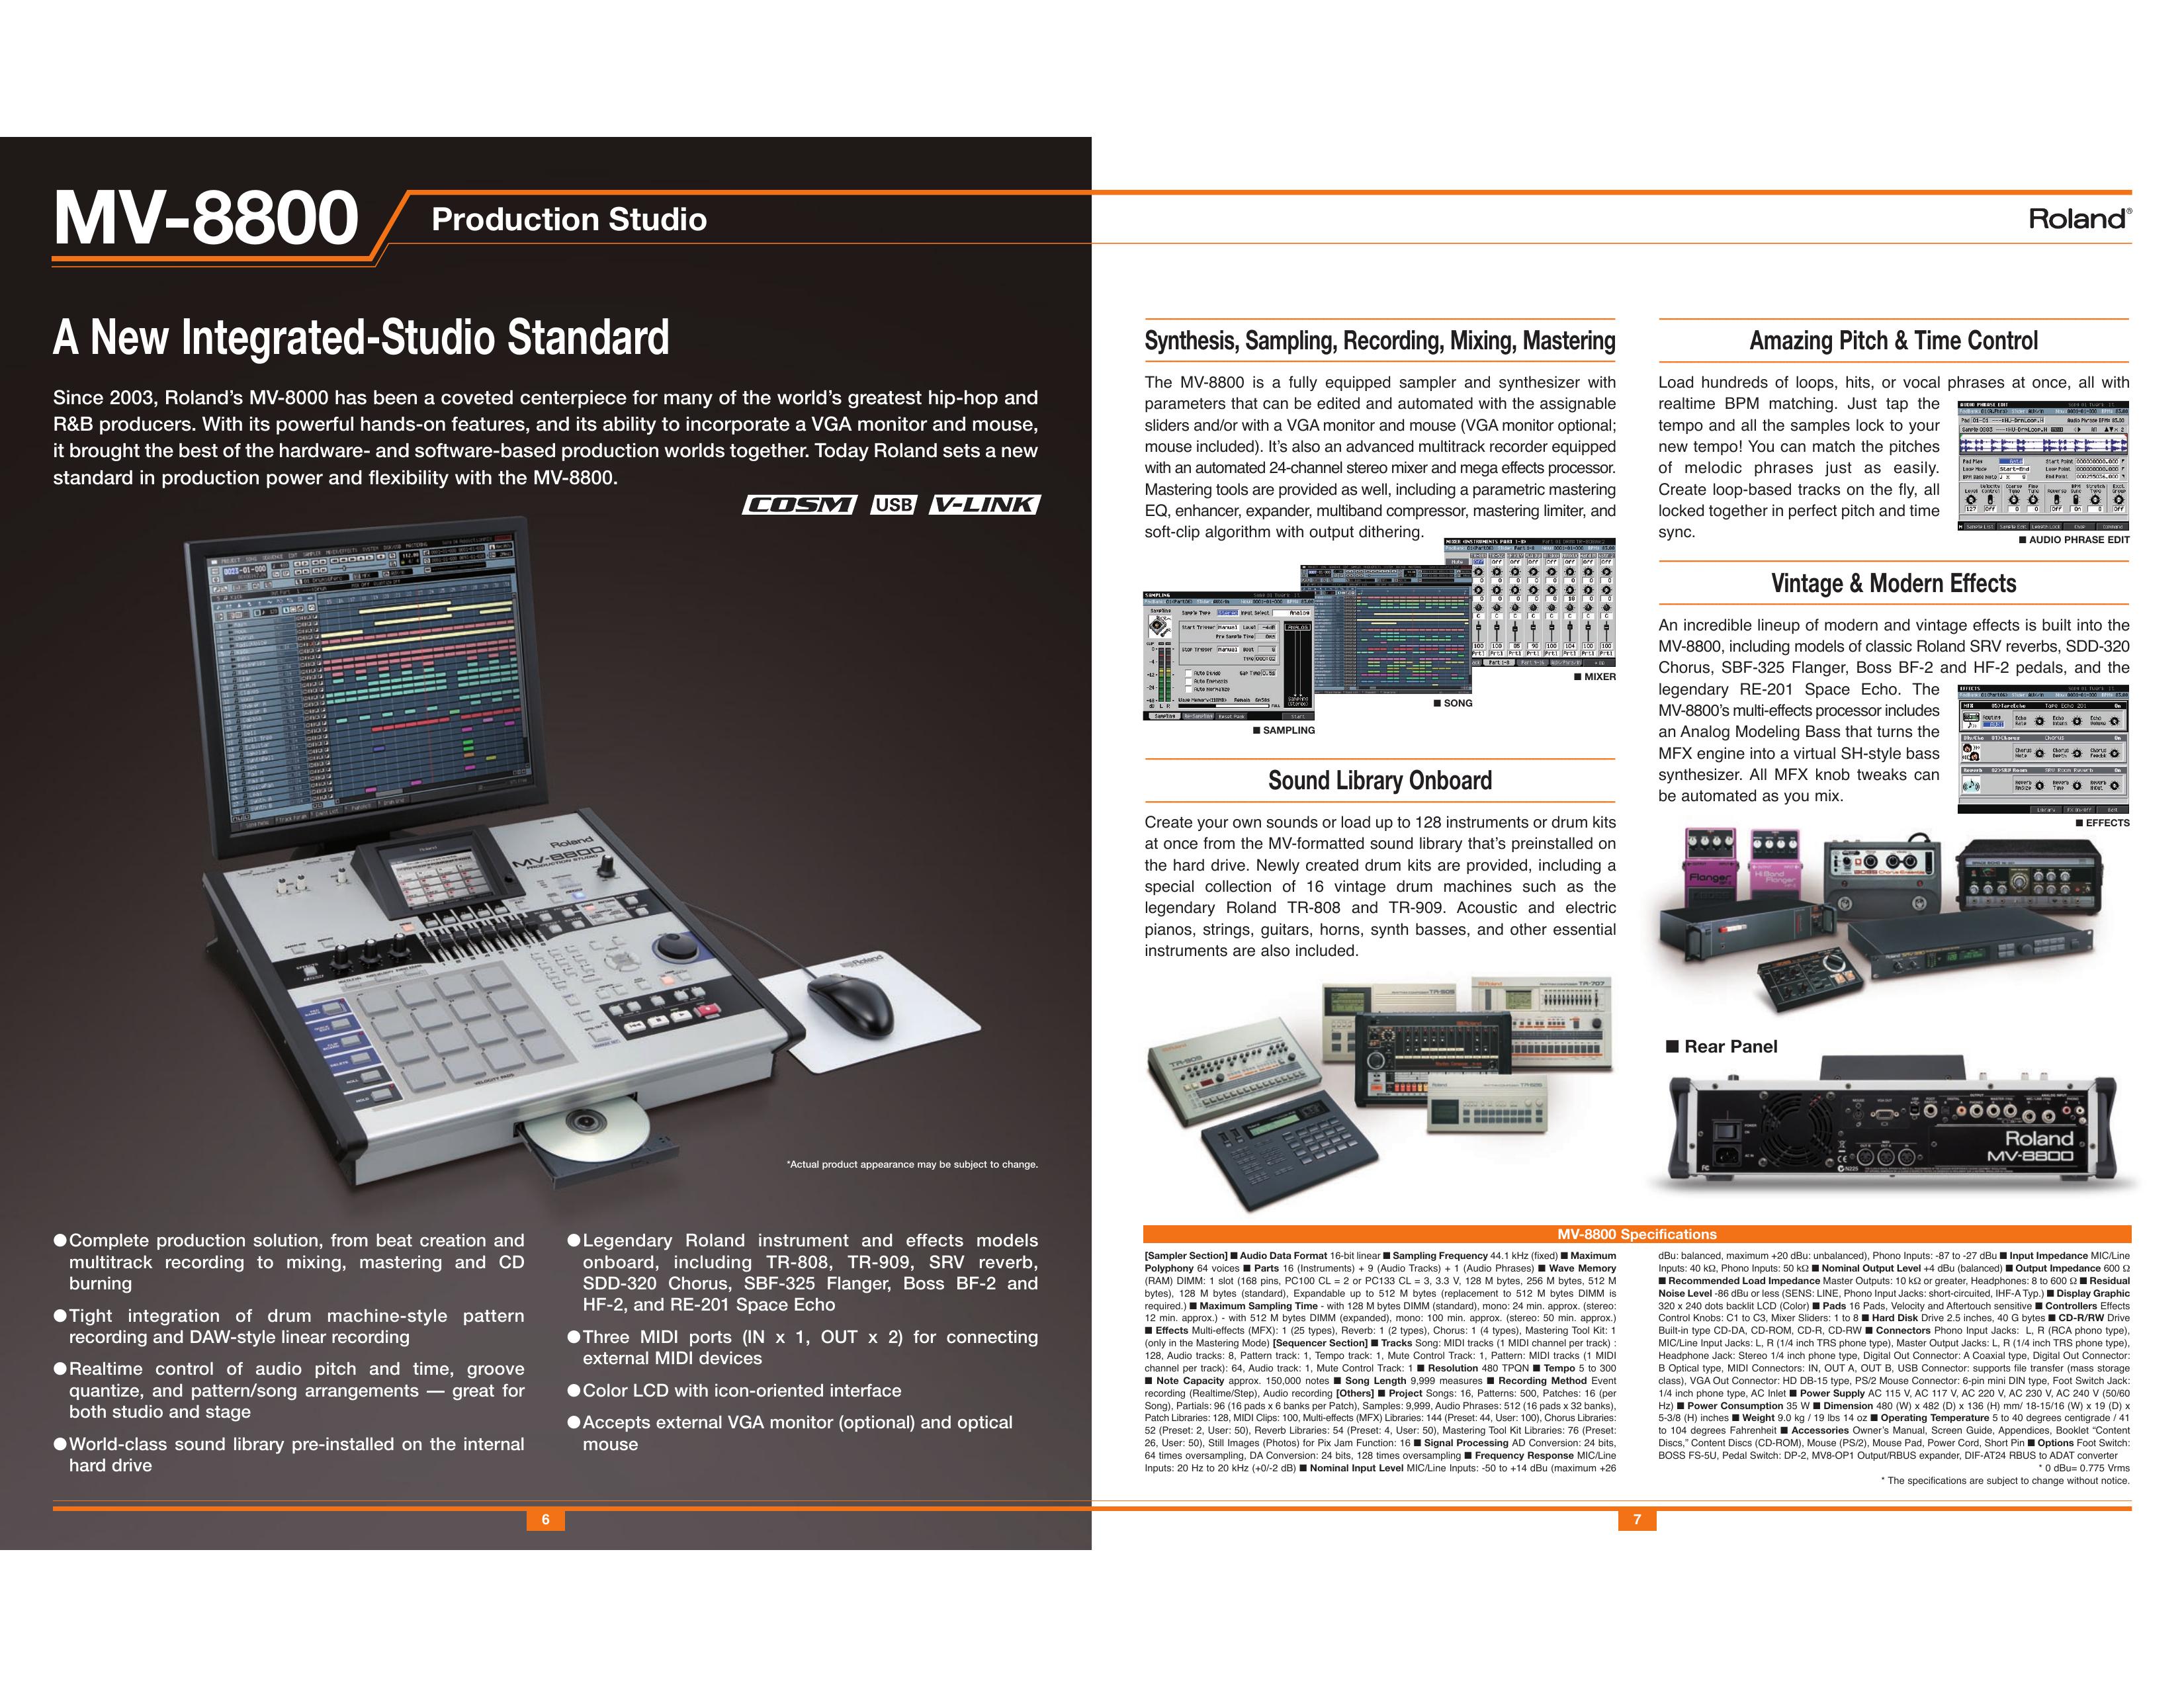 Roland Mv-8800 Recording Equipment User Manual